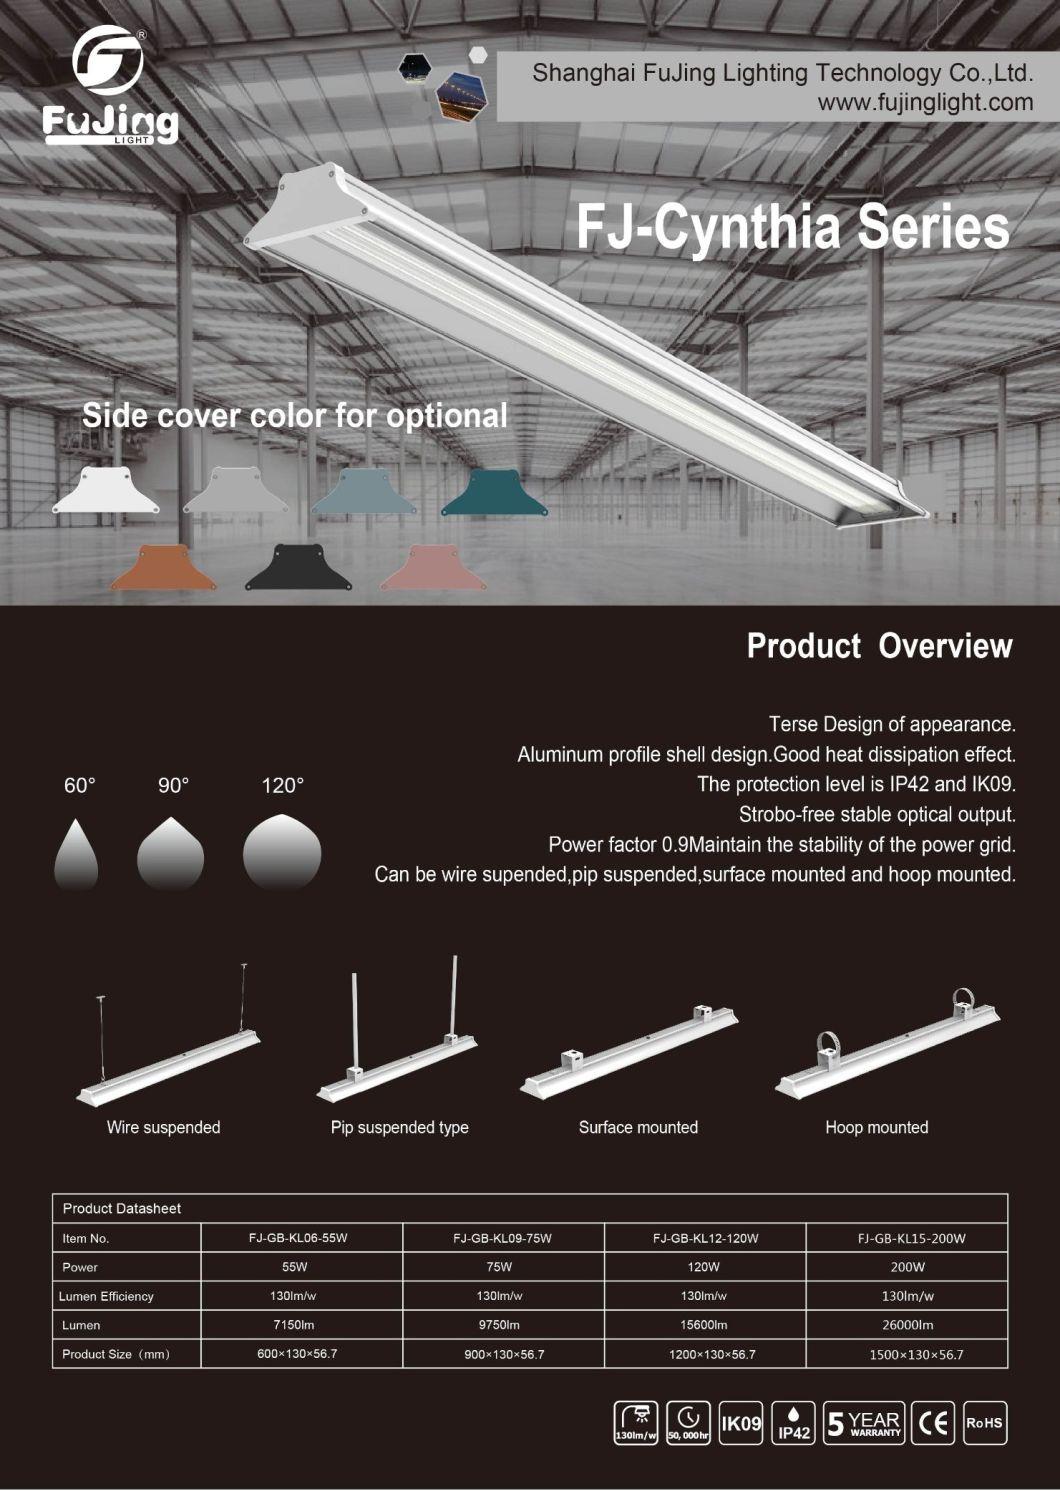 Project Ceiling Pendant Linear Lights Die Cast Aluminum LED High Bay Light